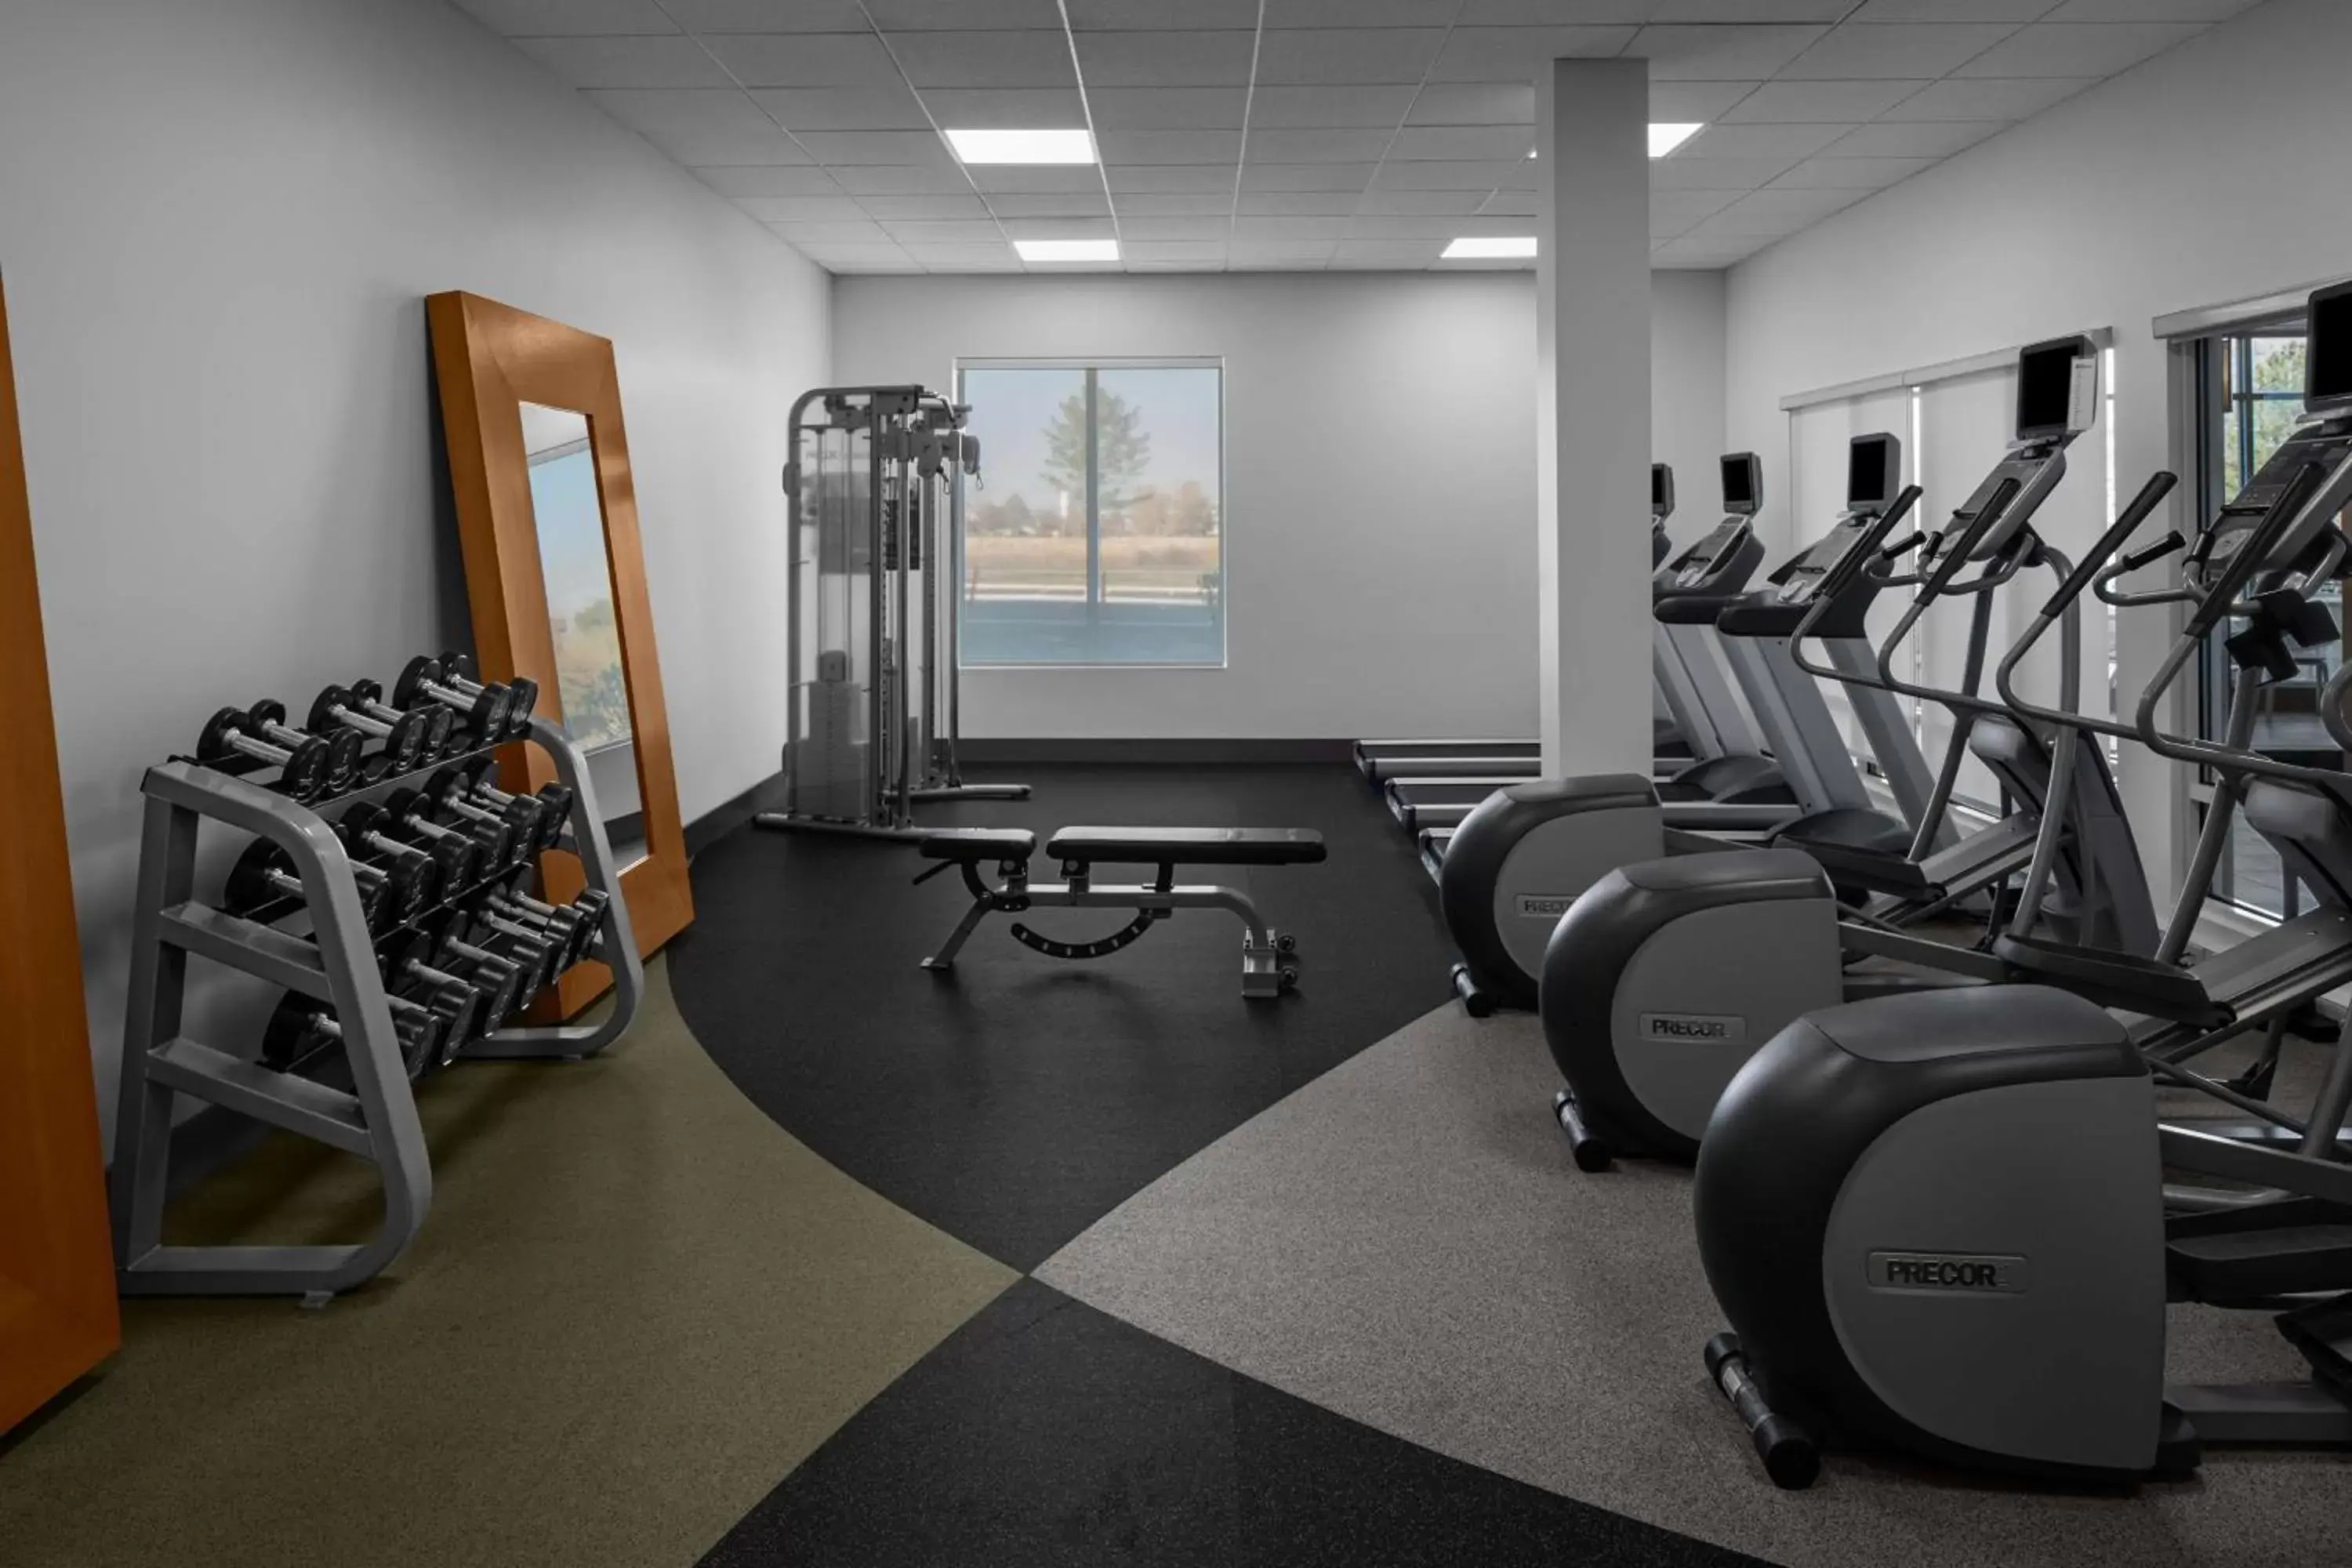 Fitness centre/facilities, Fitness Center/Facilities in Hilton Garden Inn - Salt Lake City Airport